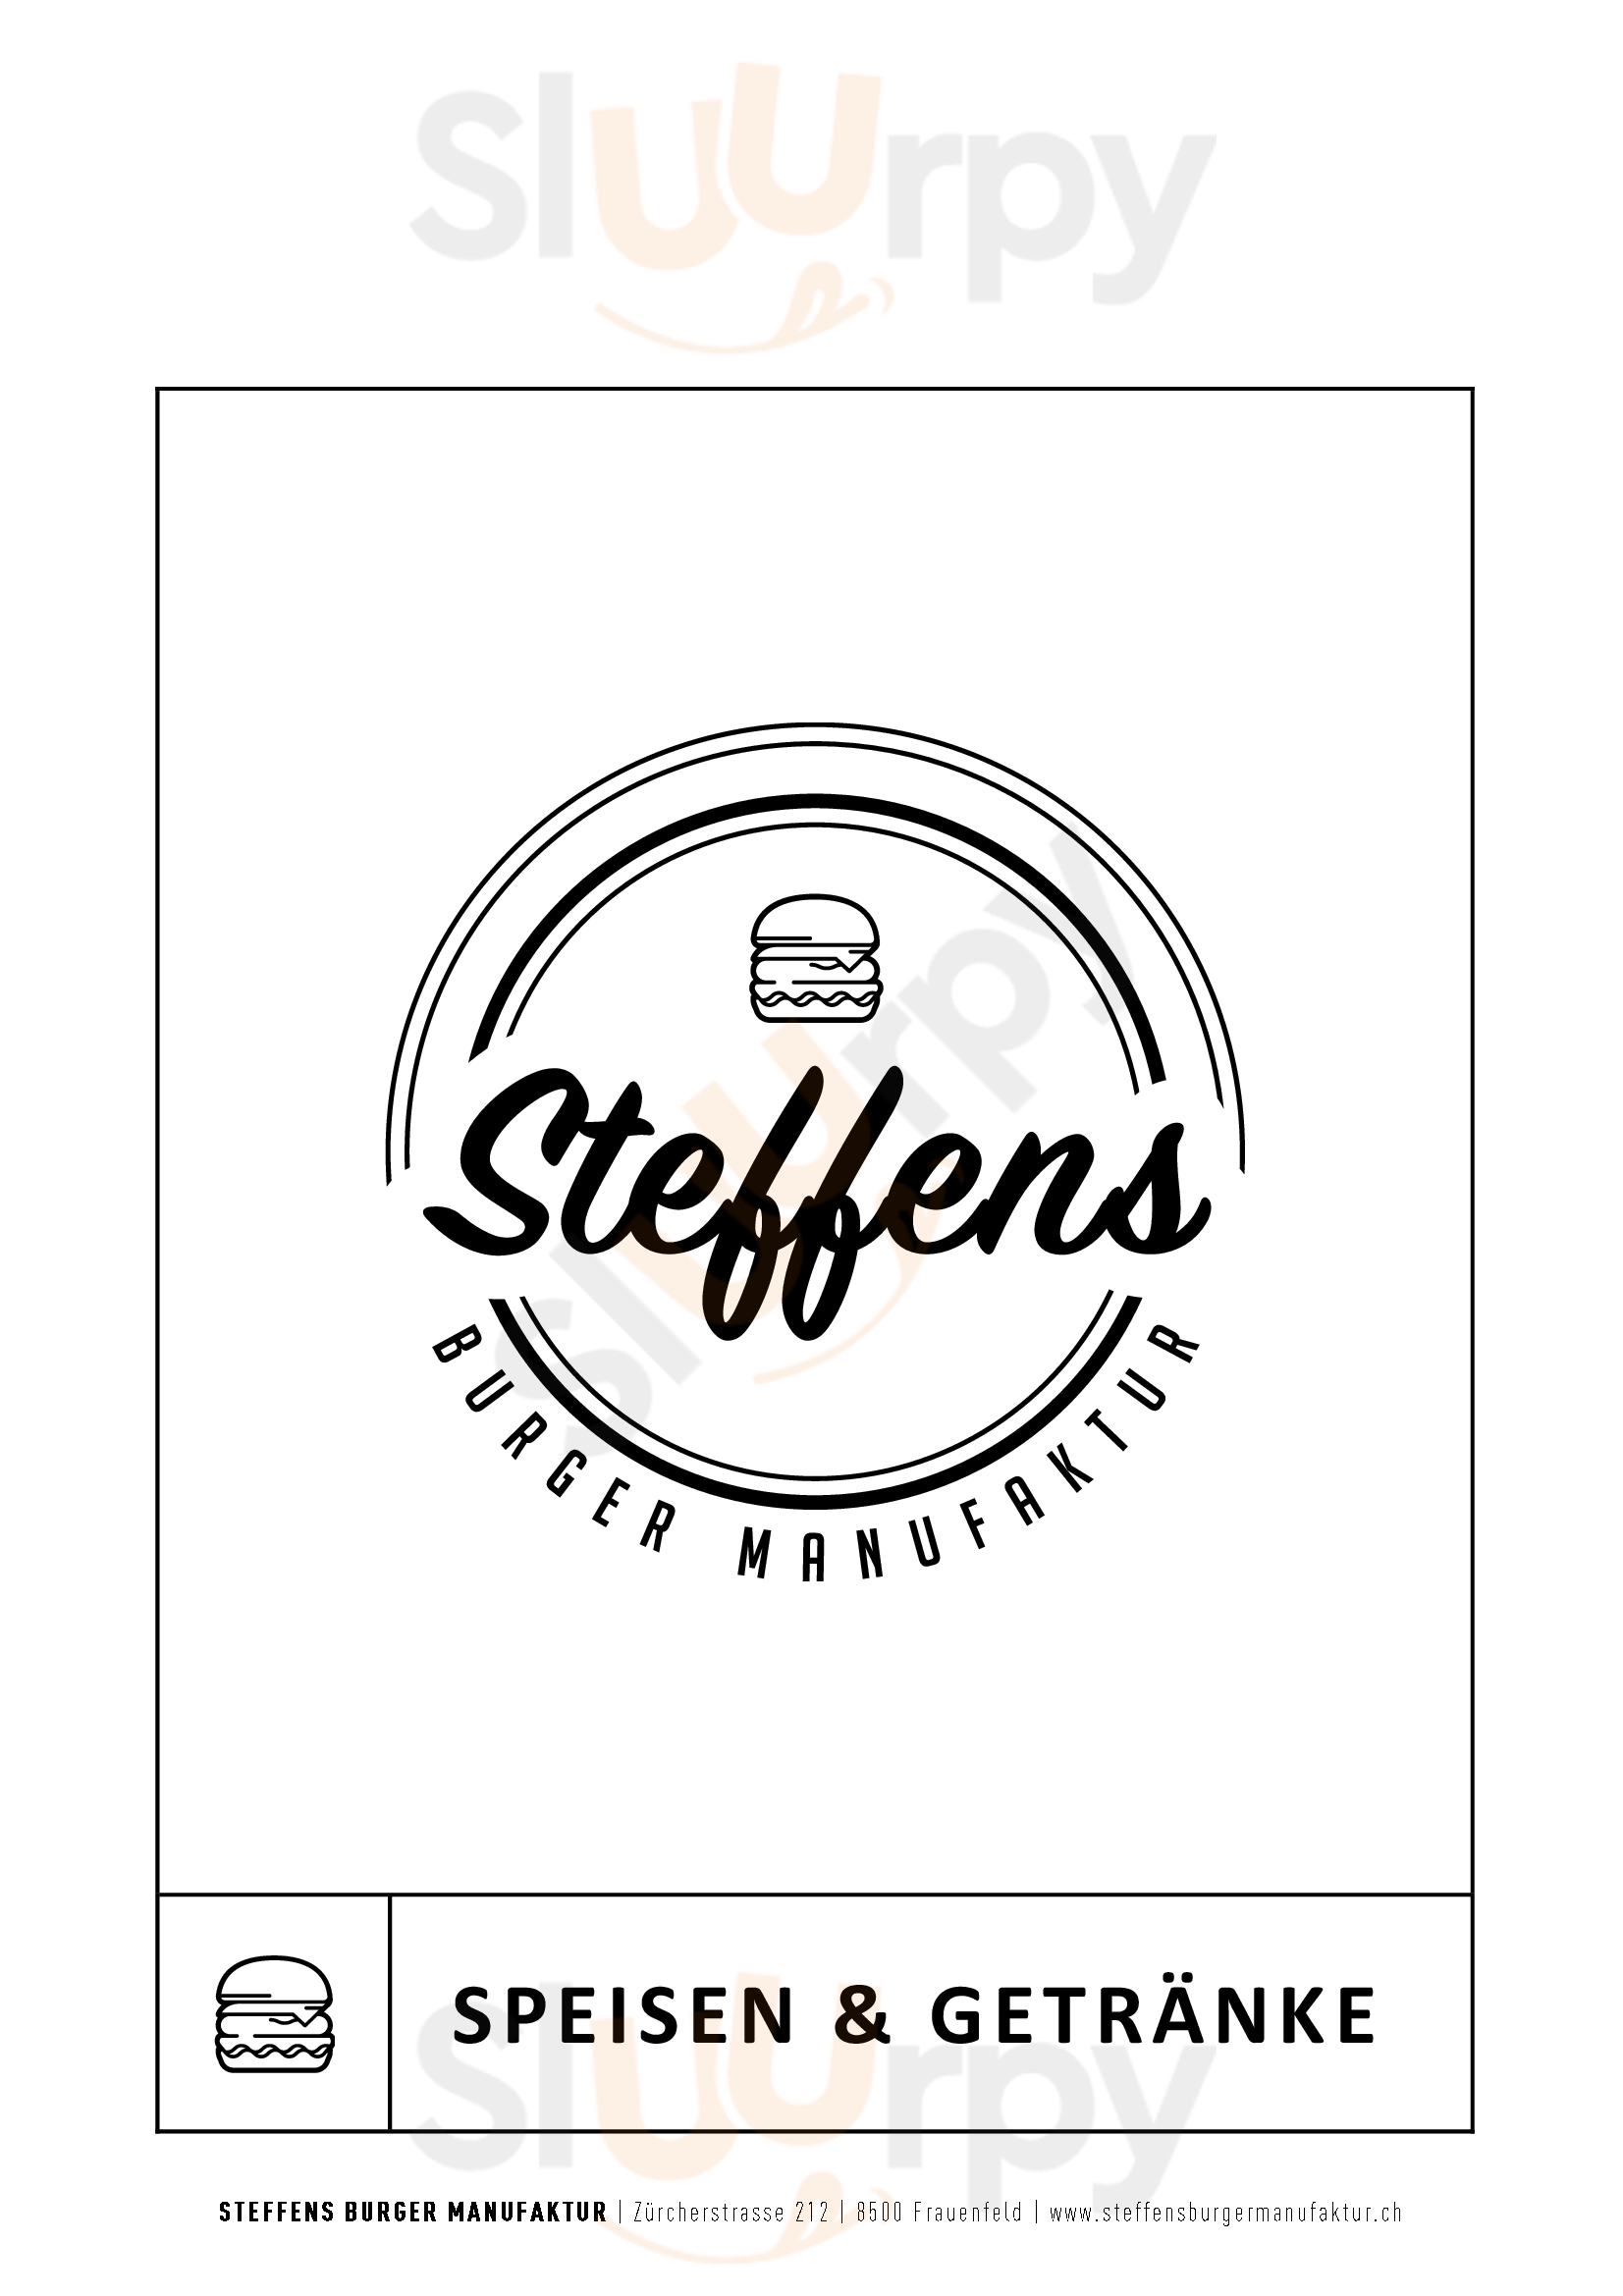 Steffens Burger Manufaktur Frauenfeld Menu - 1